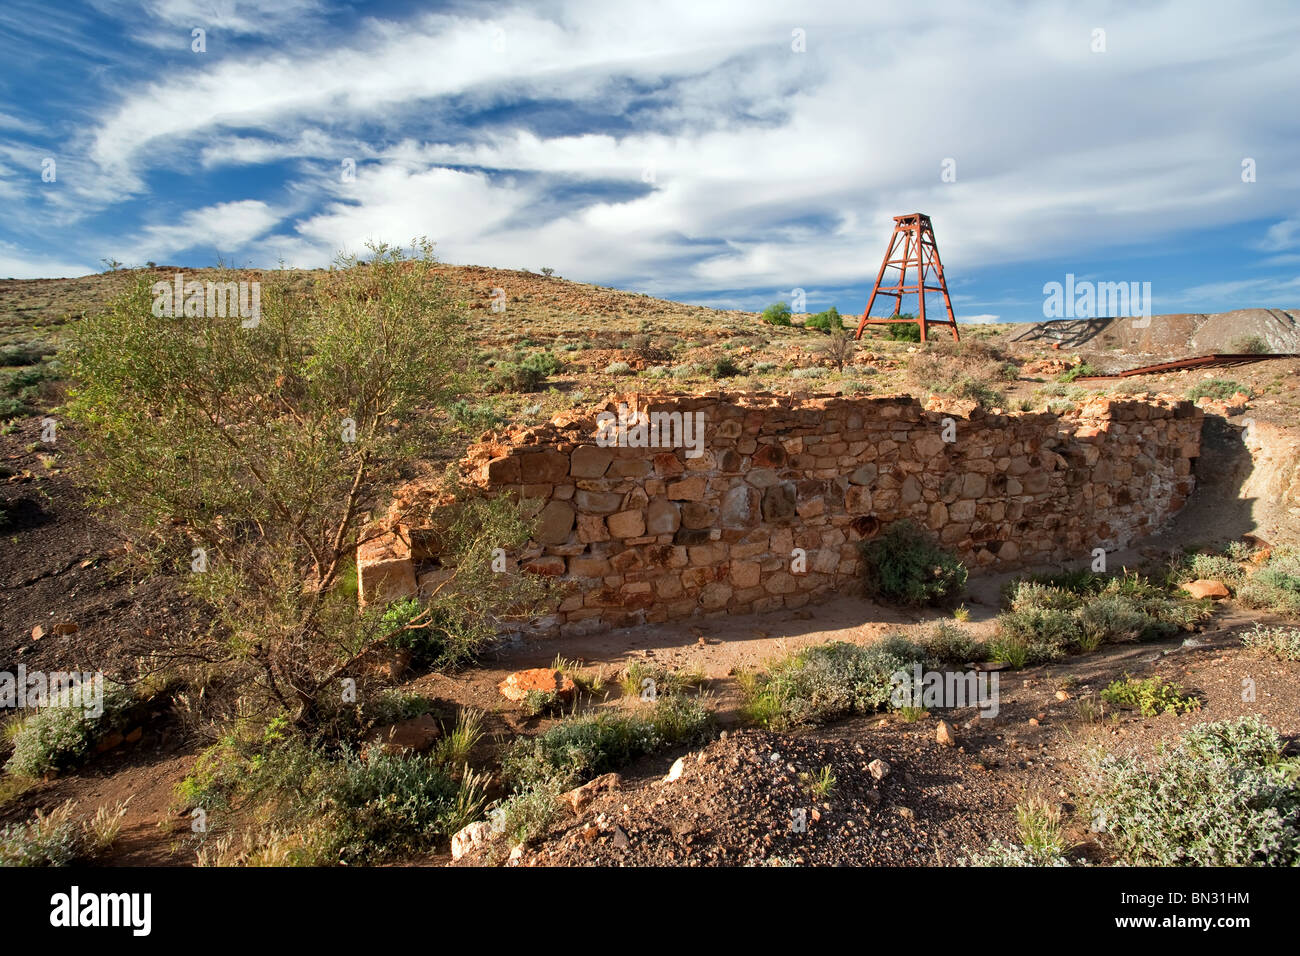 Abandoned mine near Silverton, New South Wales Australia Stock Photo: 30185280 - Alamy